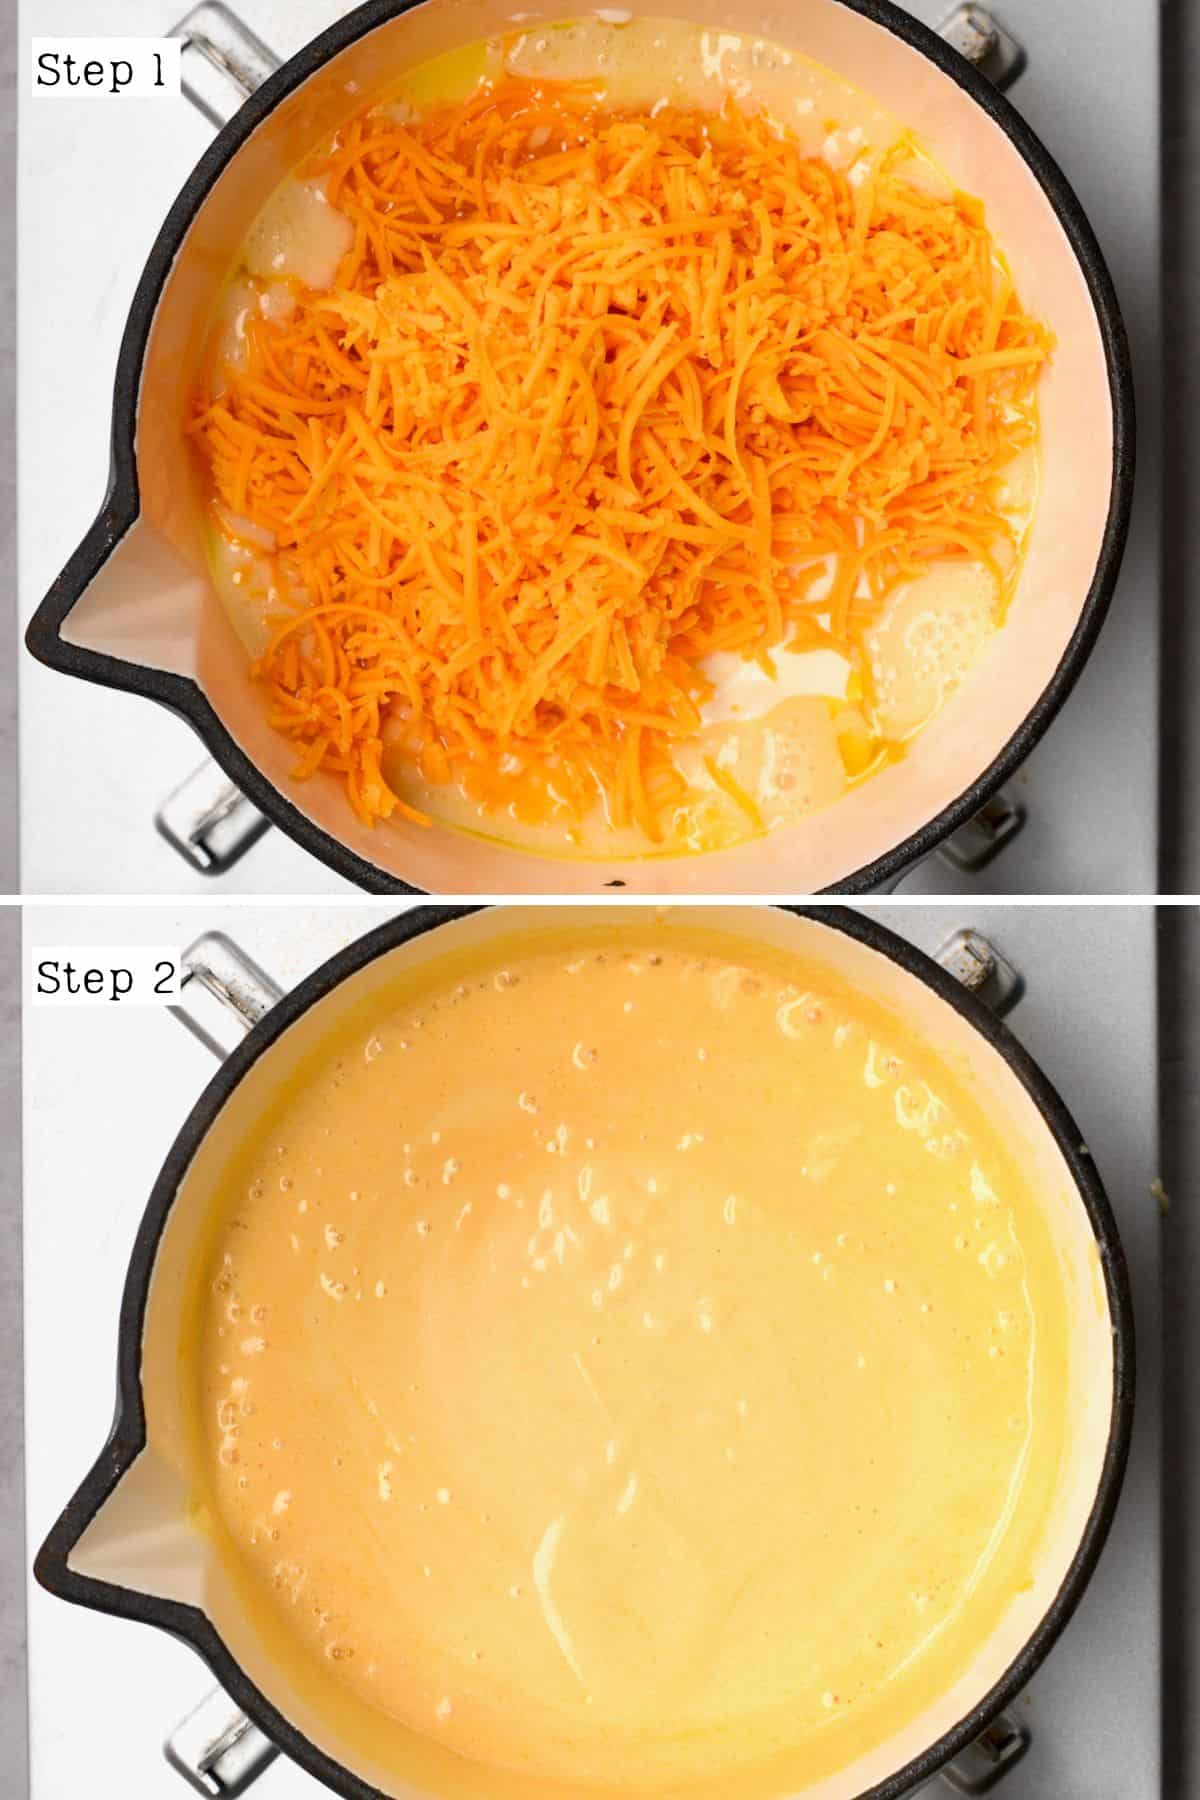 Steps for preparing sauce for casserole